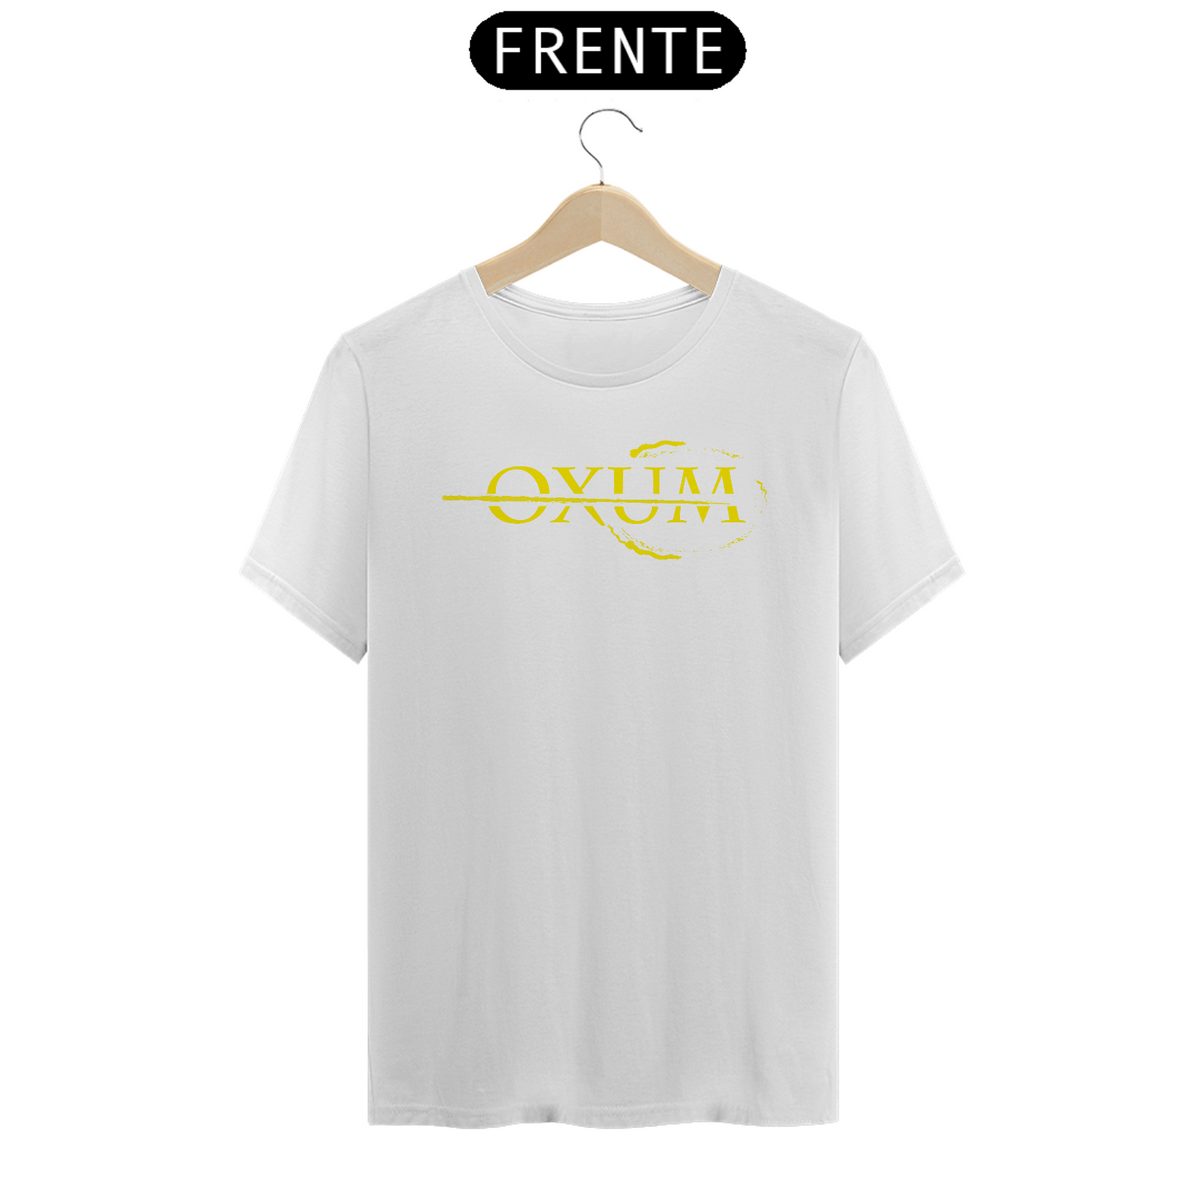 Nome do produto: T-Shirt Classic Branca - Okan Oxum